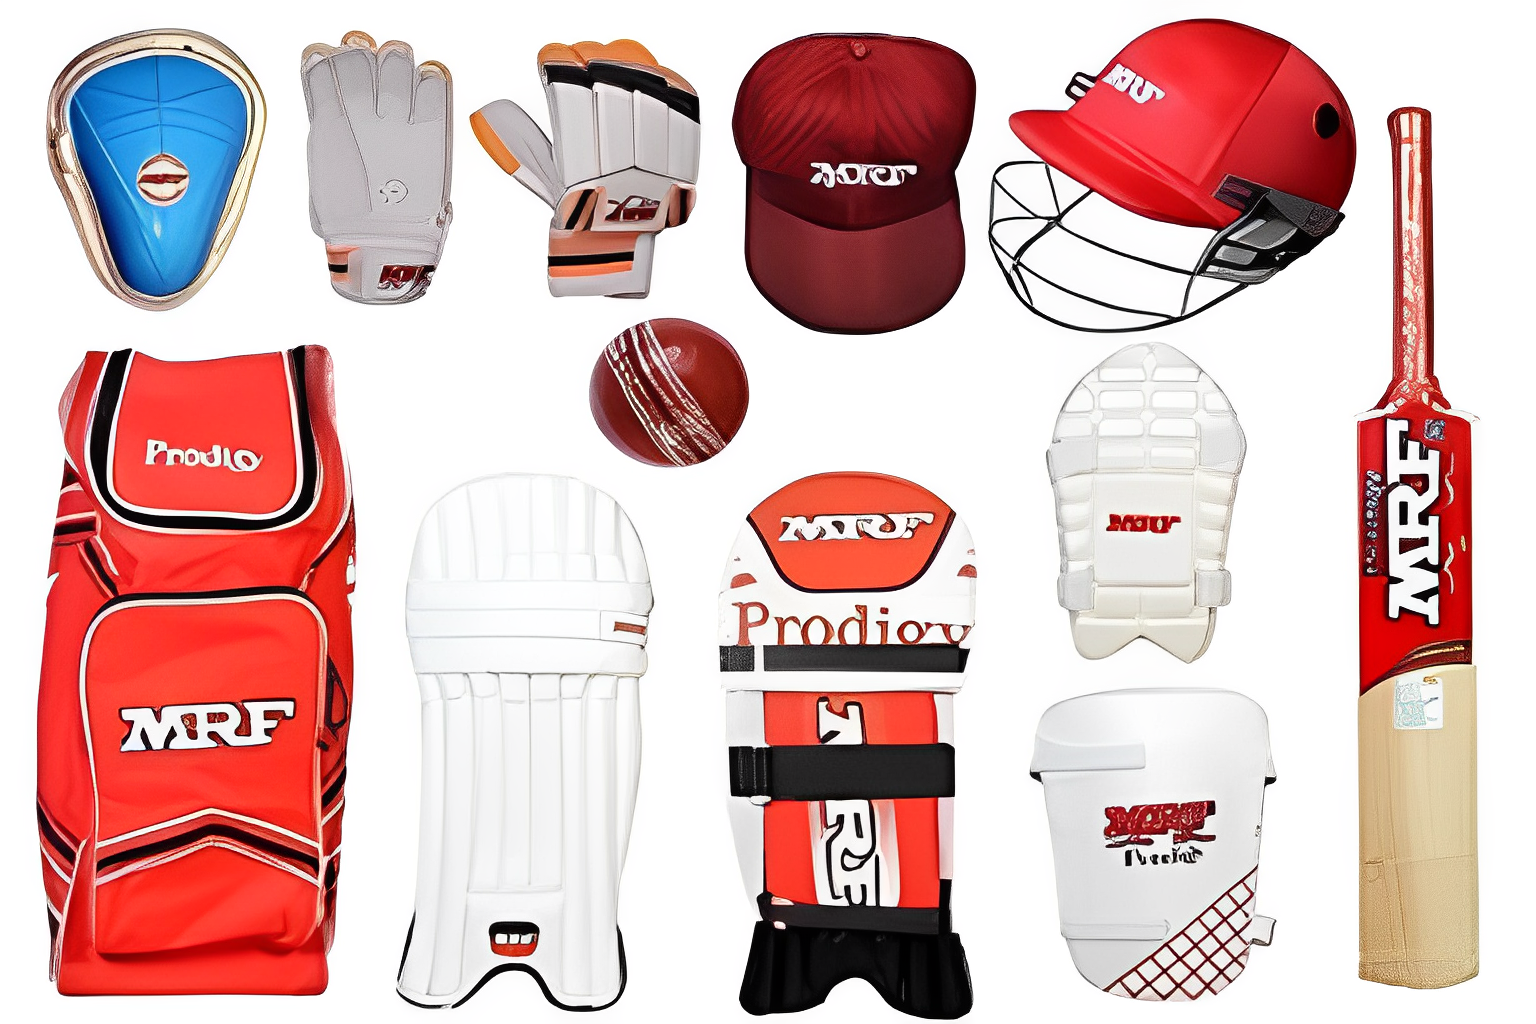 mrf cricket kit